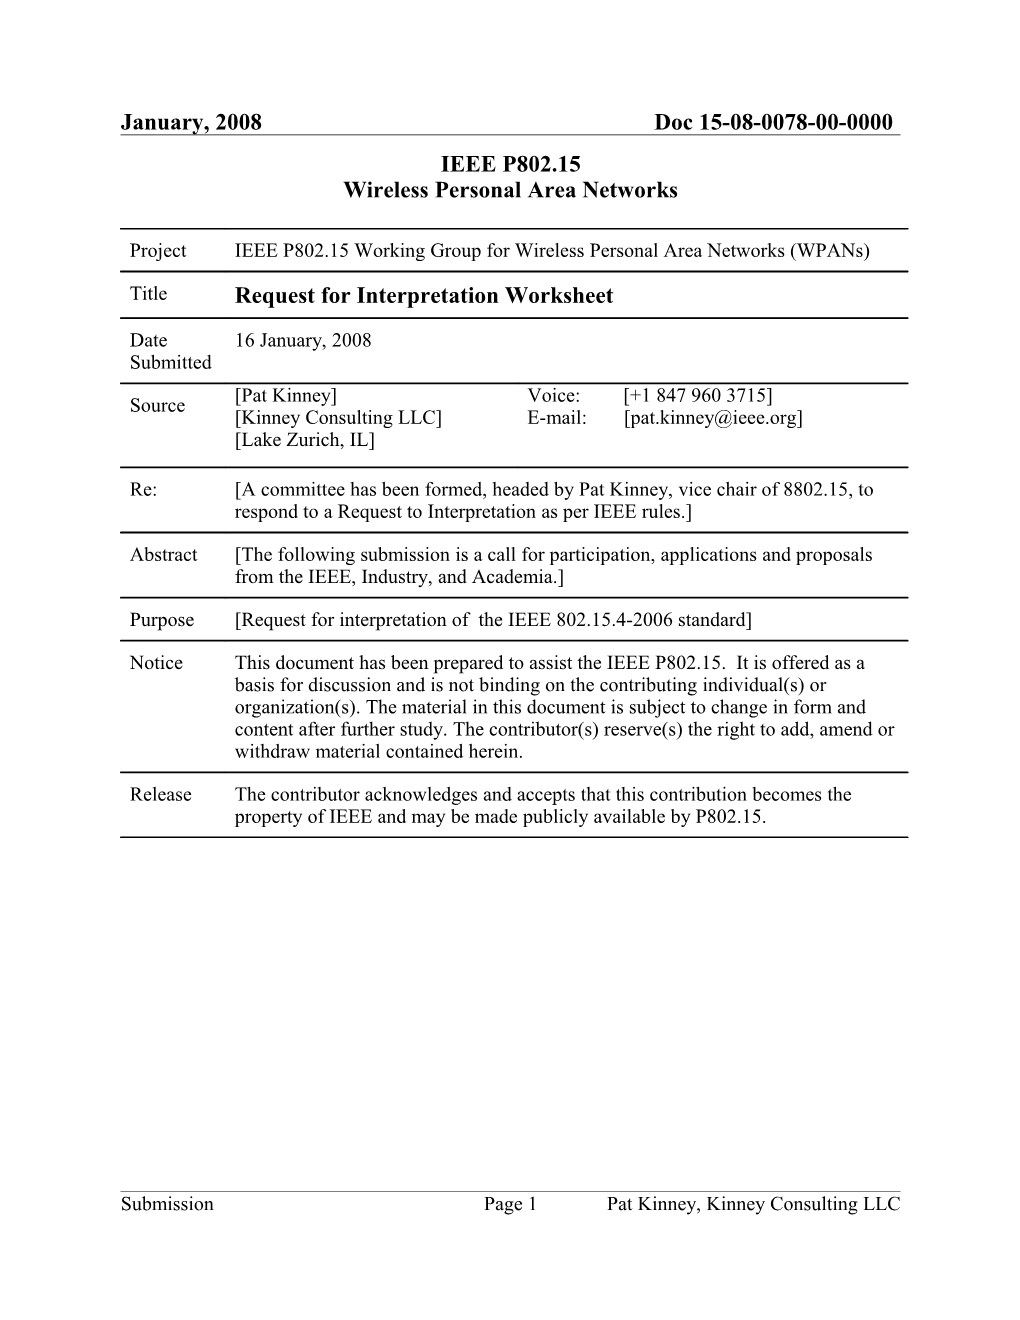 IEEE P802.15.Request for Interpretation Worksheet